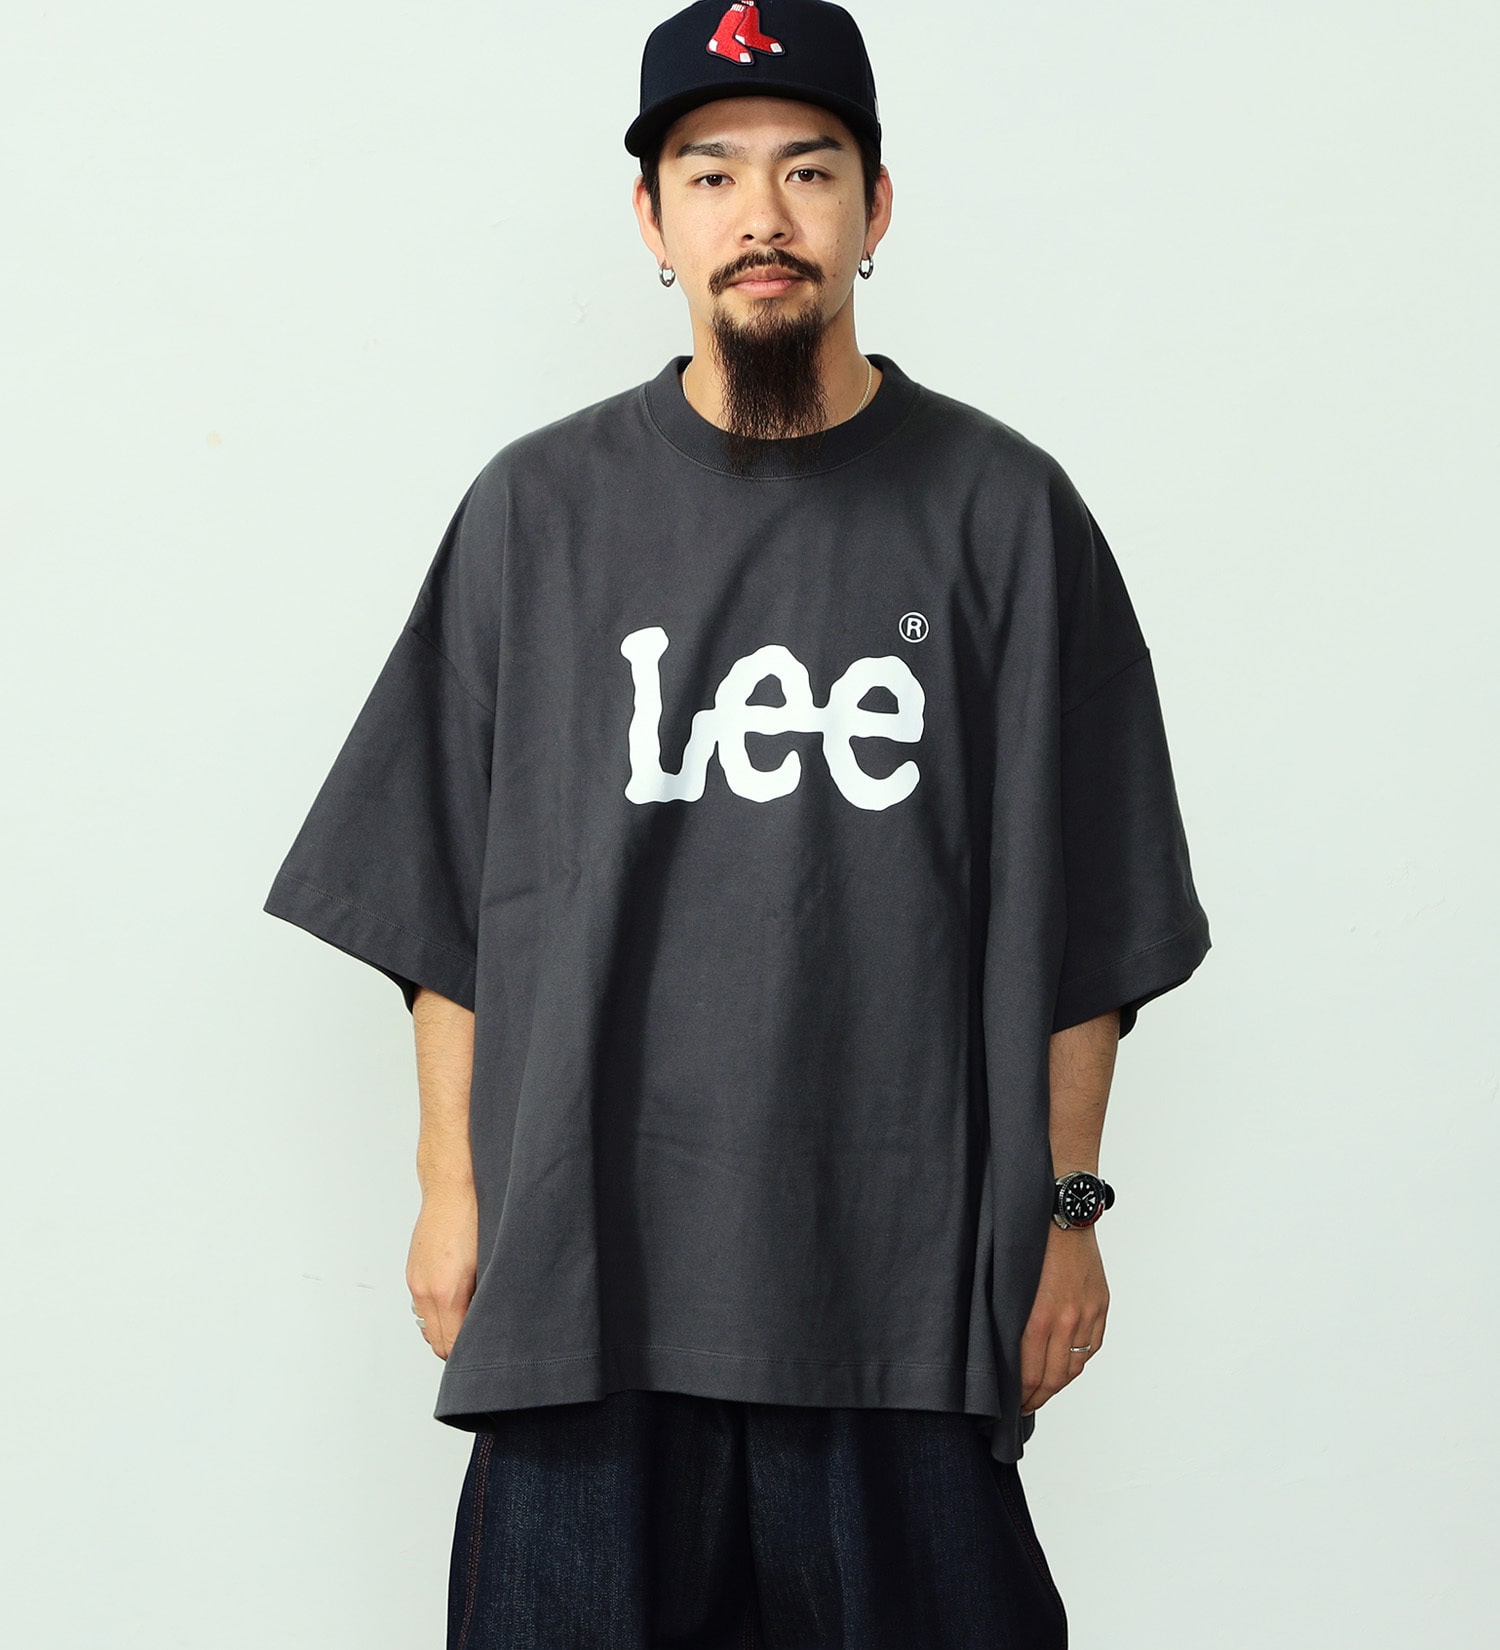 Lee(リー)の【GW SALE】【SUPER SIZED】Lee LOGO ショートスリーブTee|トップス/Tシャツ/カットソー/メンズ|チャコールグレー